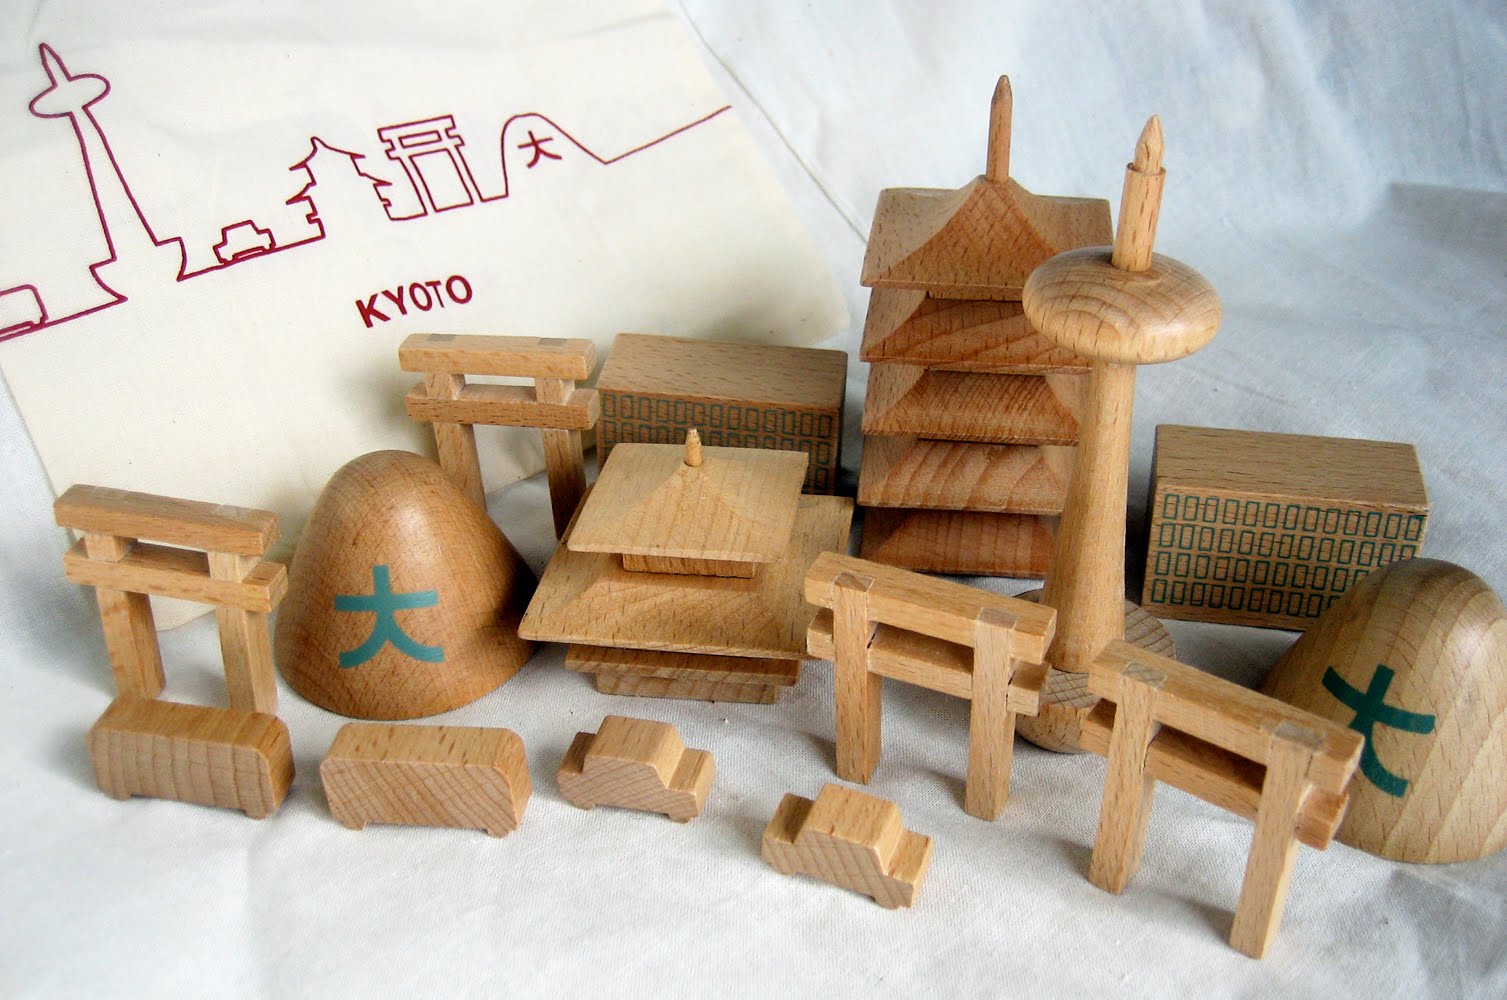 kyoto blocks